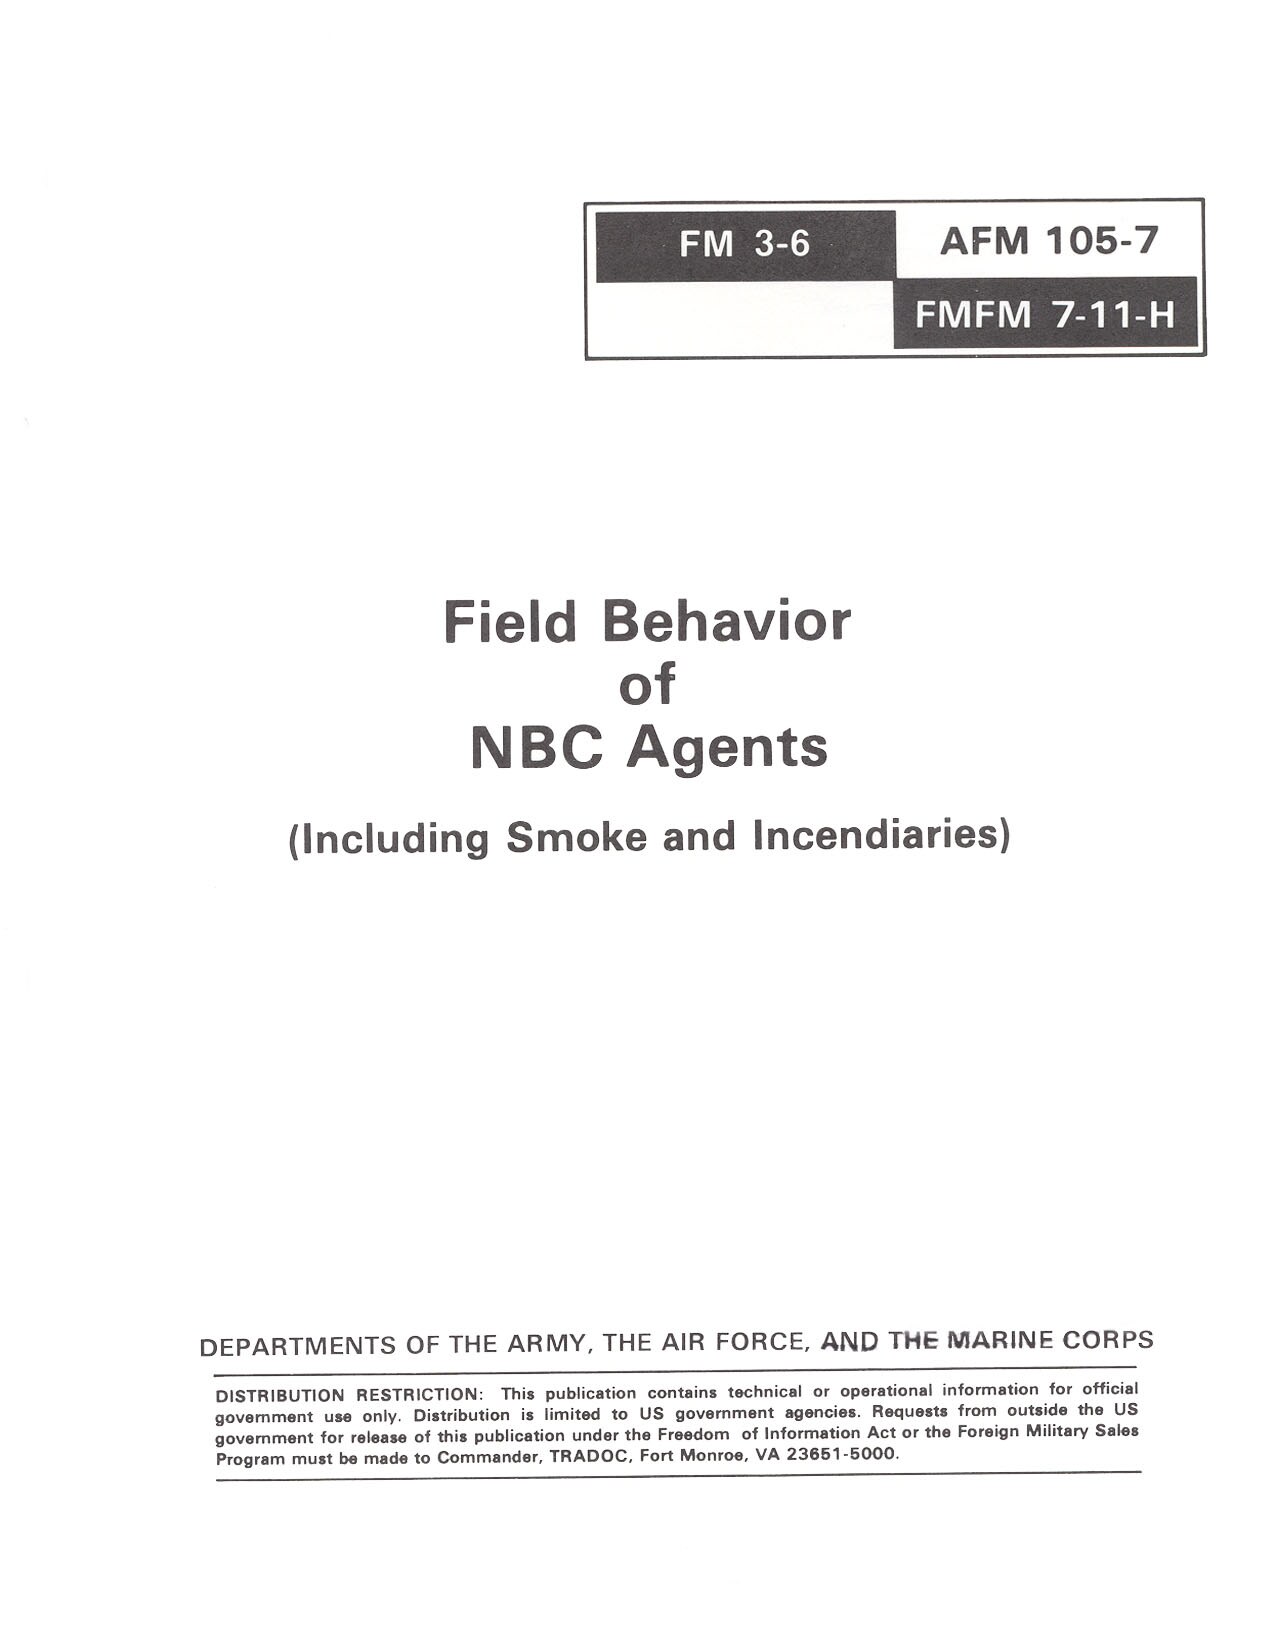 FM 3-6 Field Behavior of NBC Agents